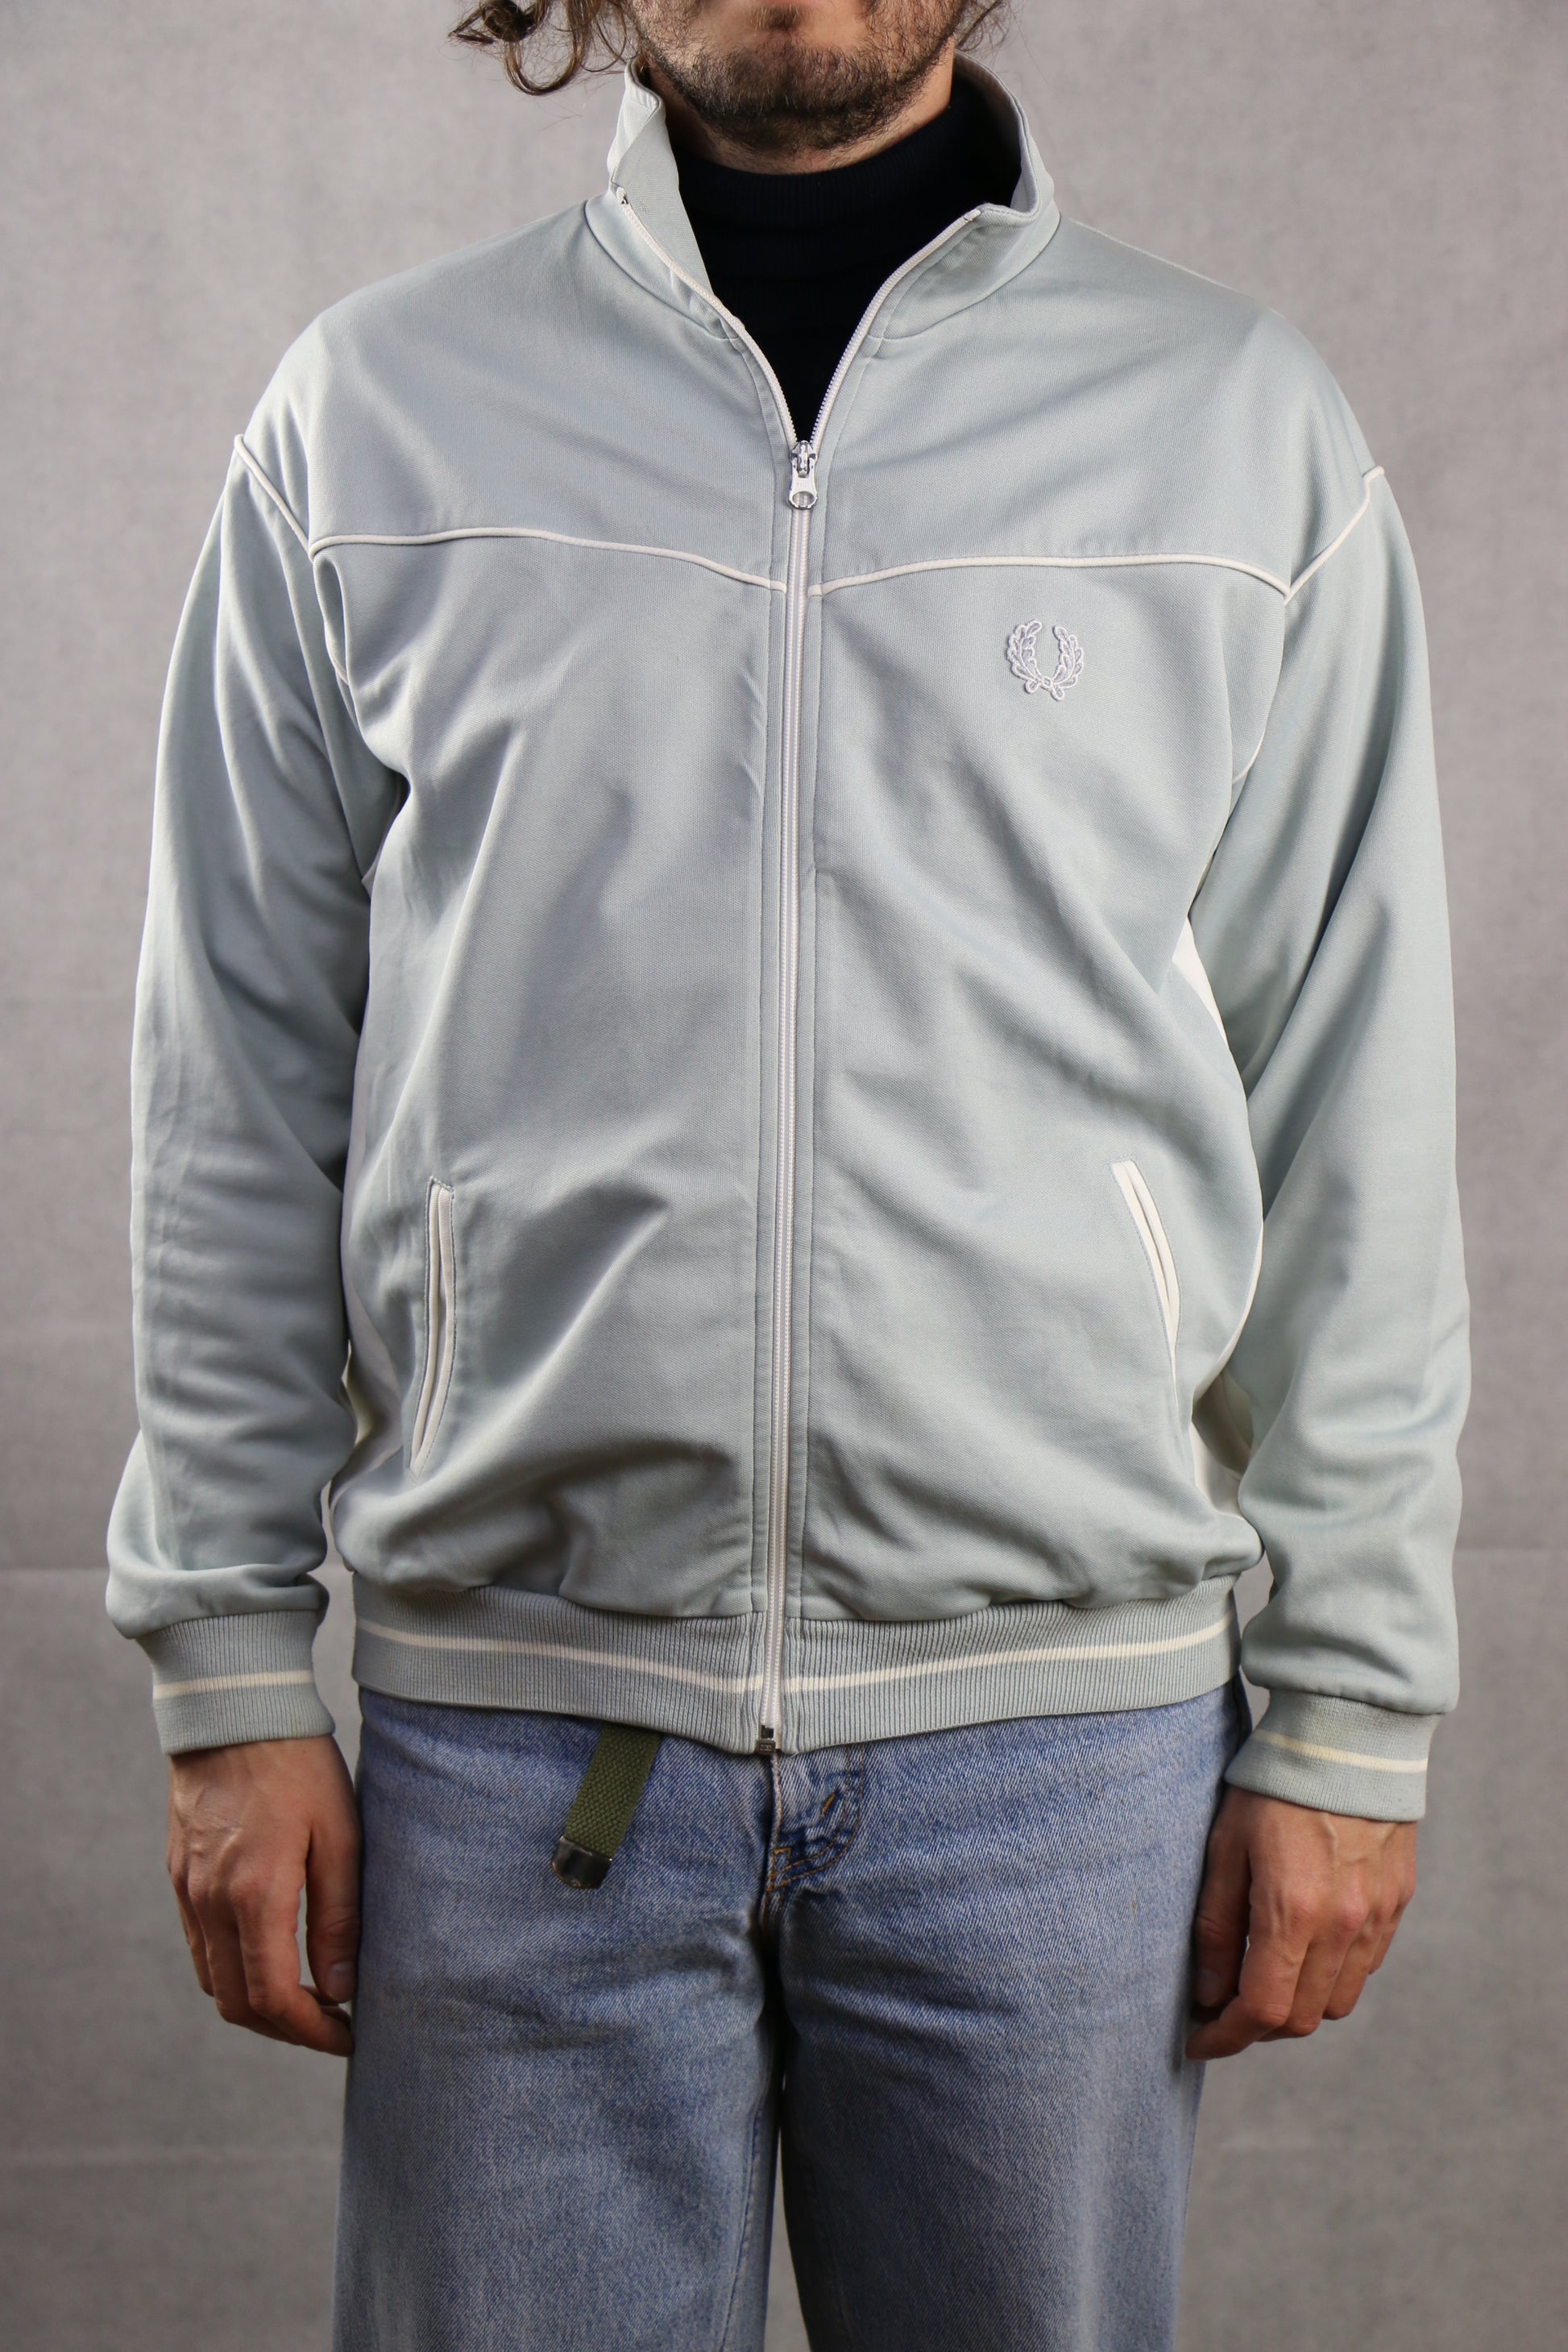 Fred Perry Grey Track jacket - vintage clothing clochard92.com